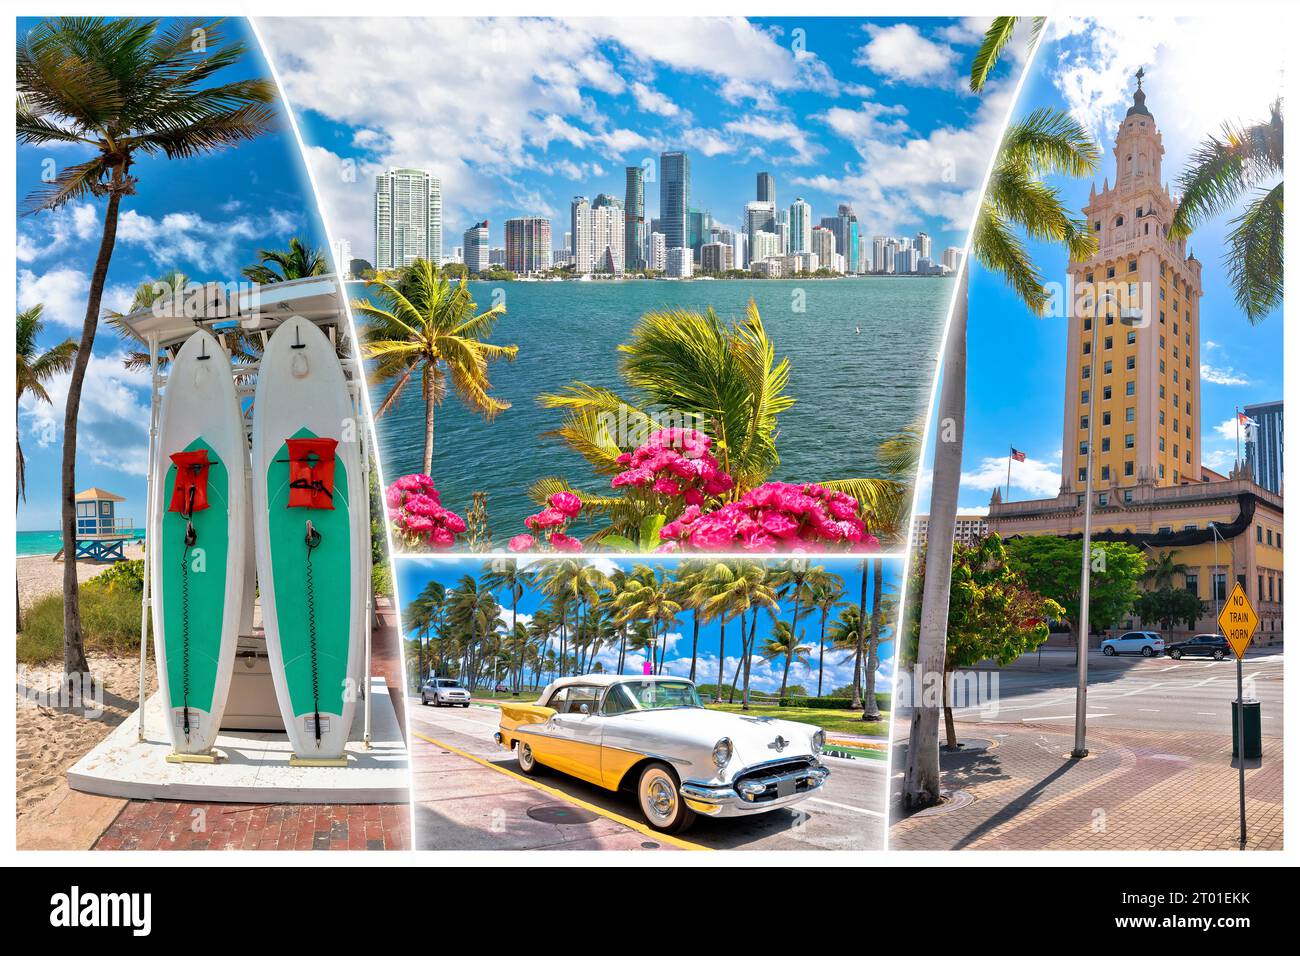 City of Miami landmarks tourist postcard view, Florida state, United states of America Stock Photo